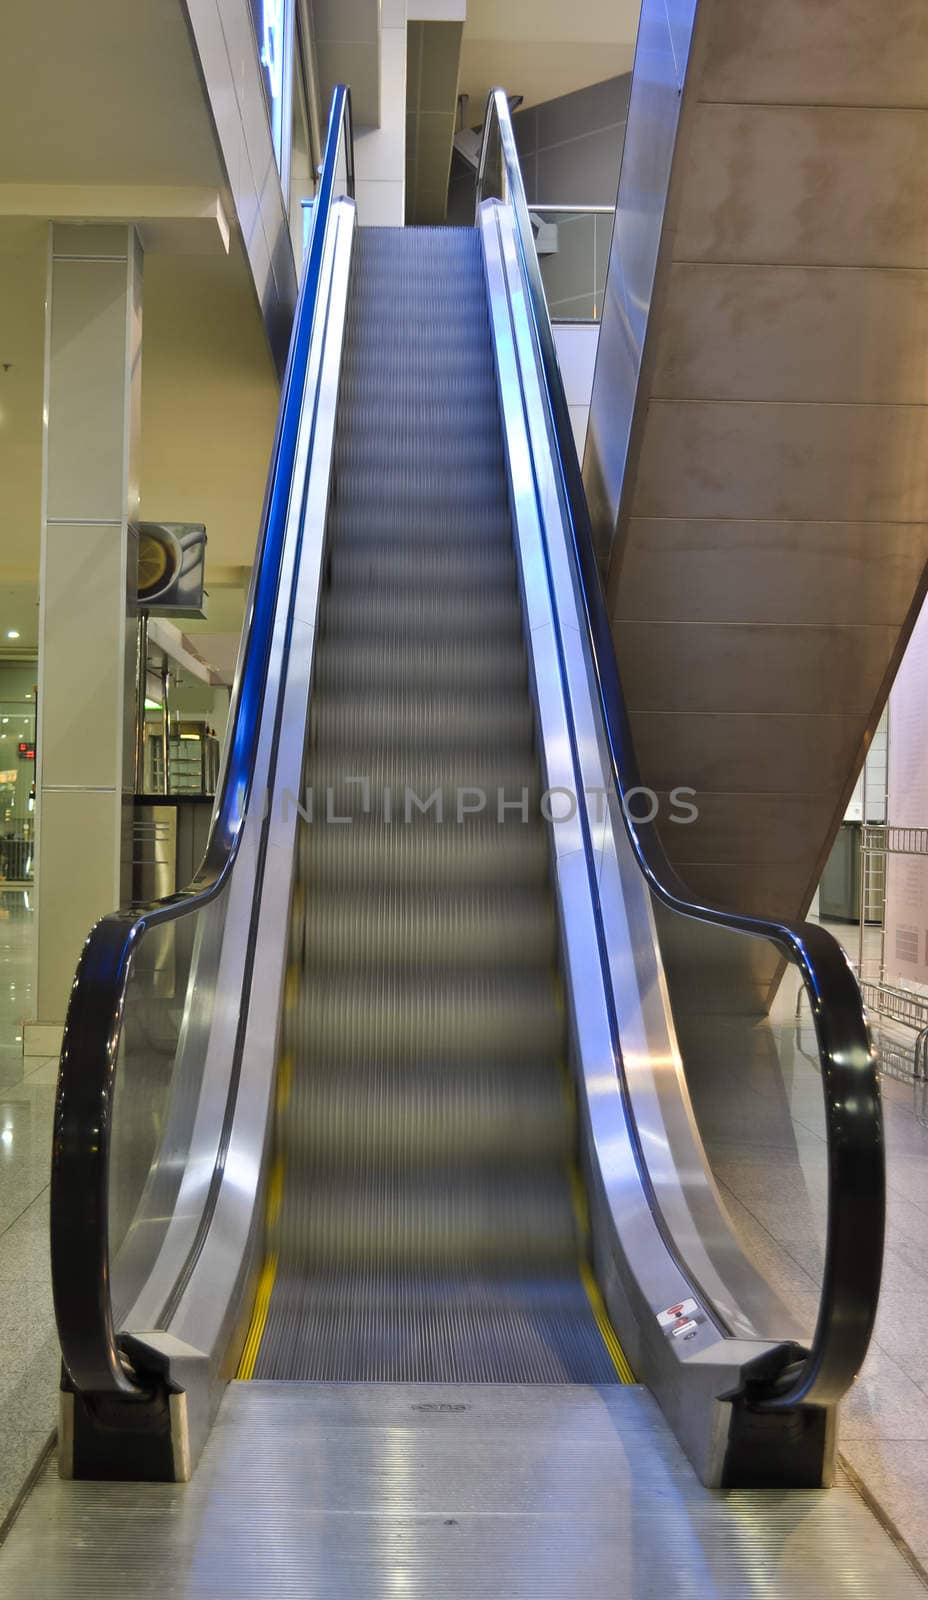 The escalator in movement by vlaru